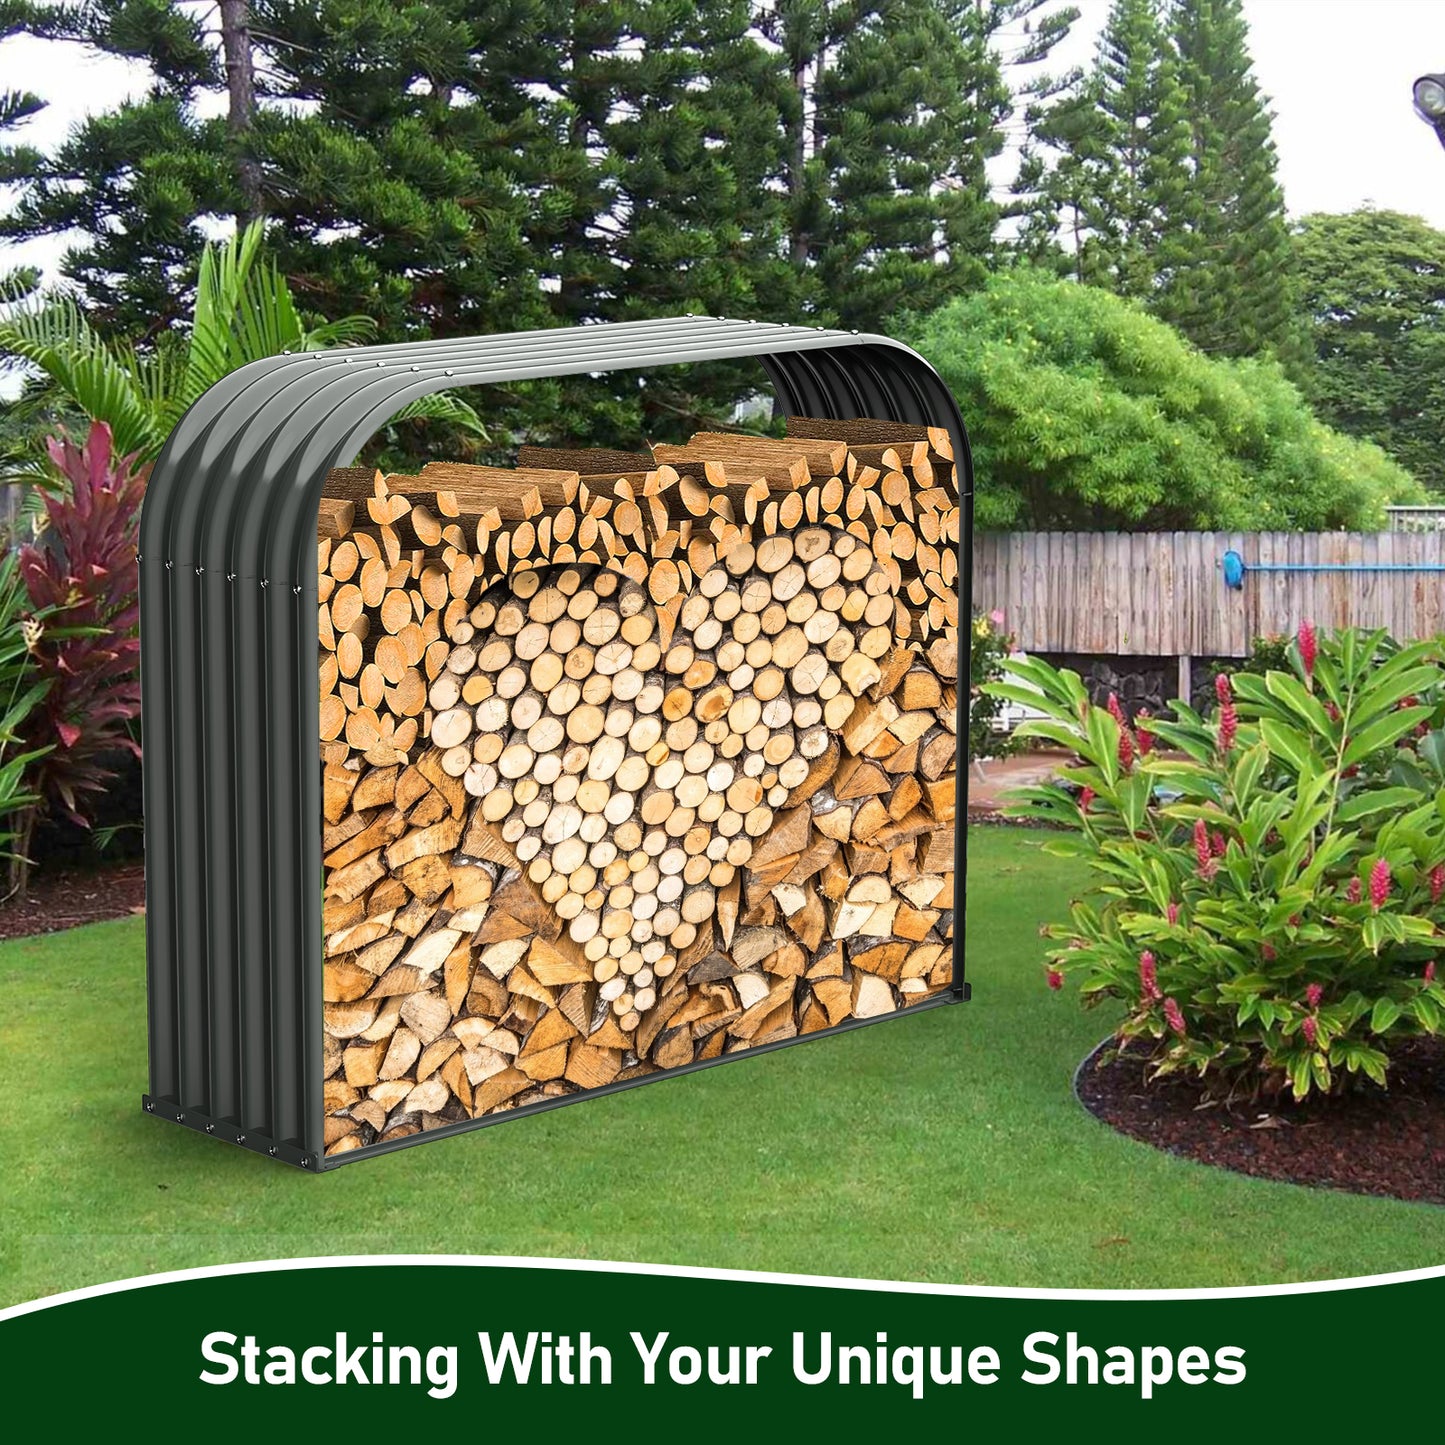 18"D x 59"W x 48"H,32 cube feet,Galvanized Steel Firewood Storage Shed Outdoor, Heavy Duty Log holder,Anleolife